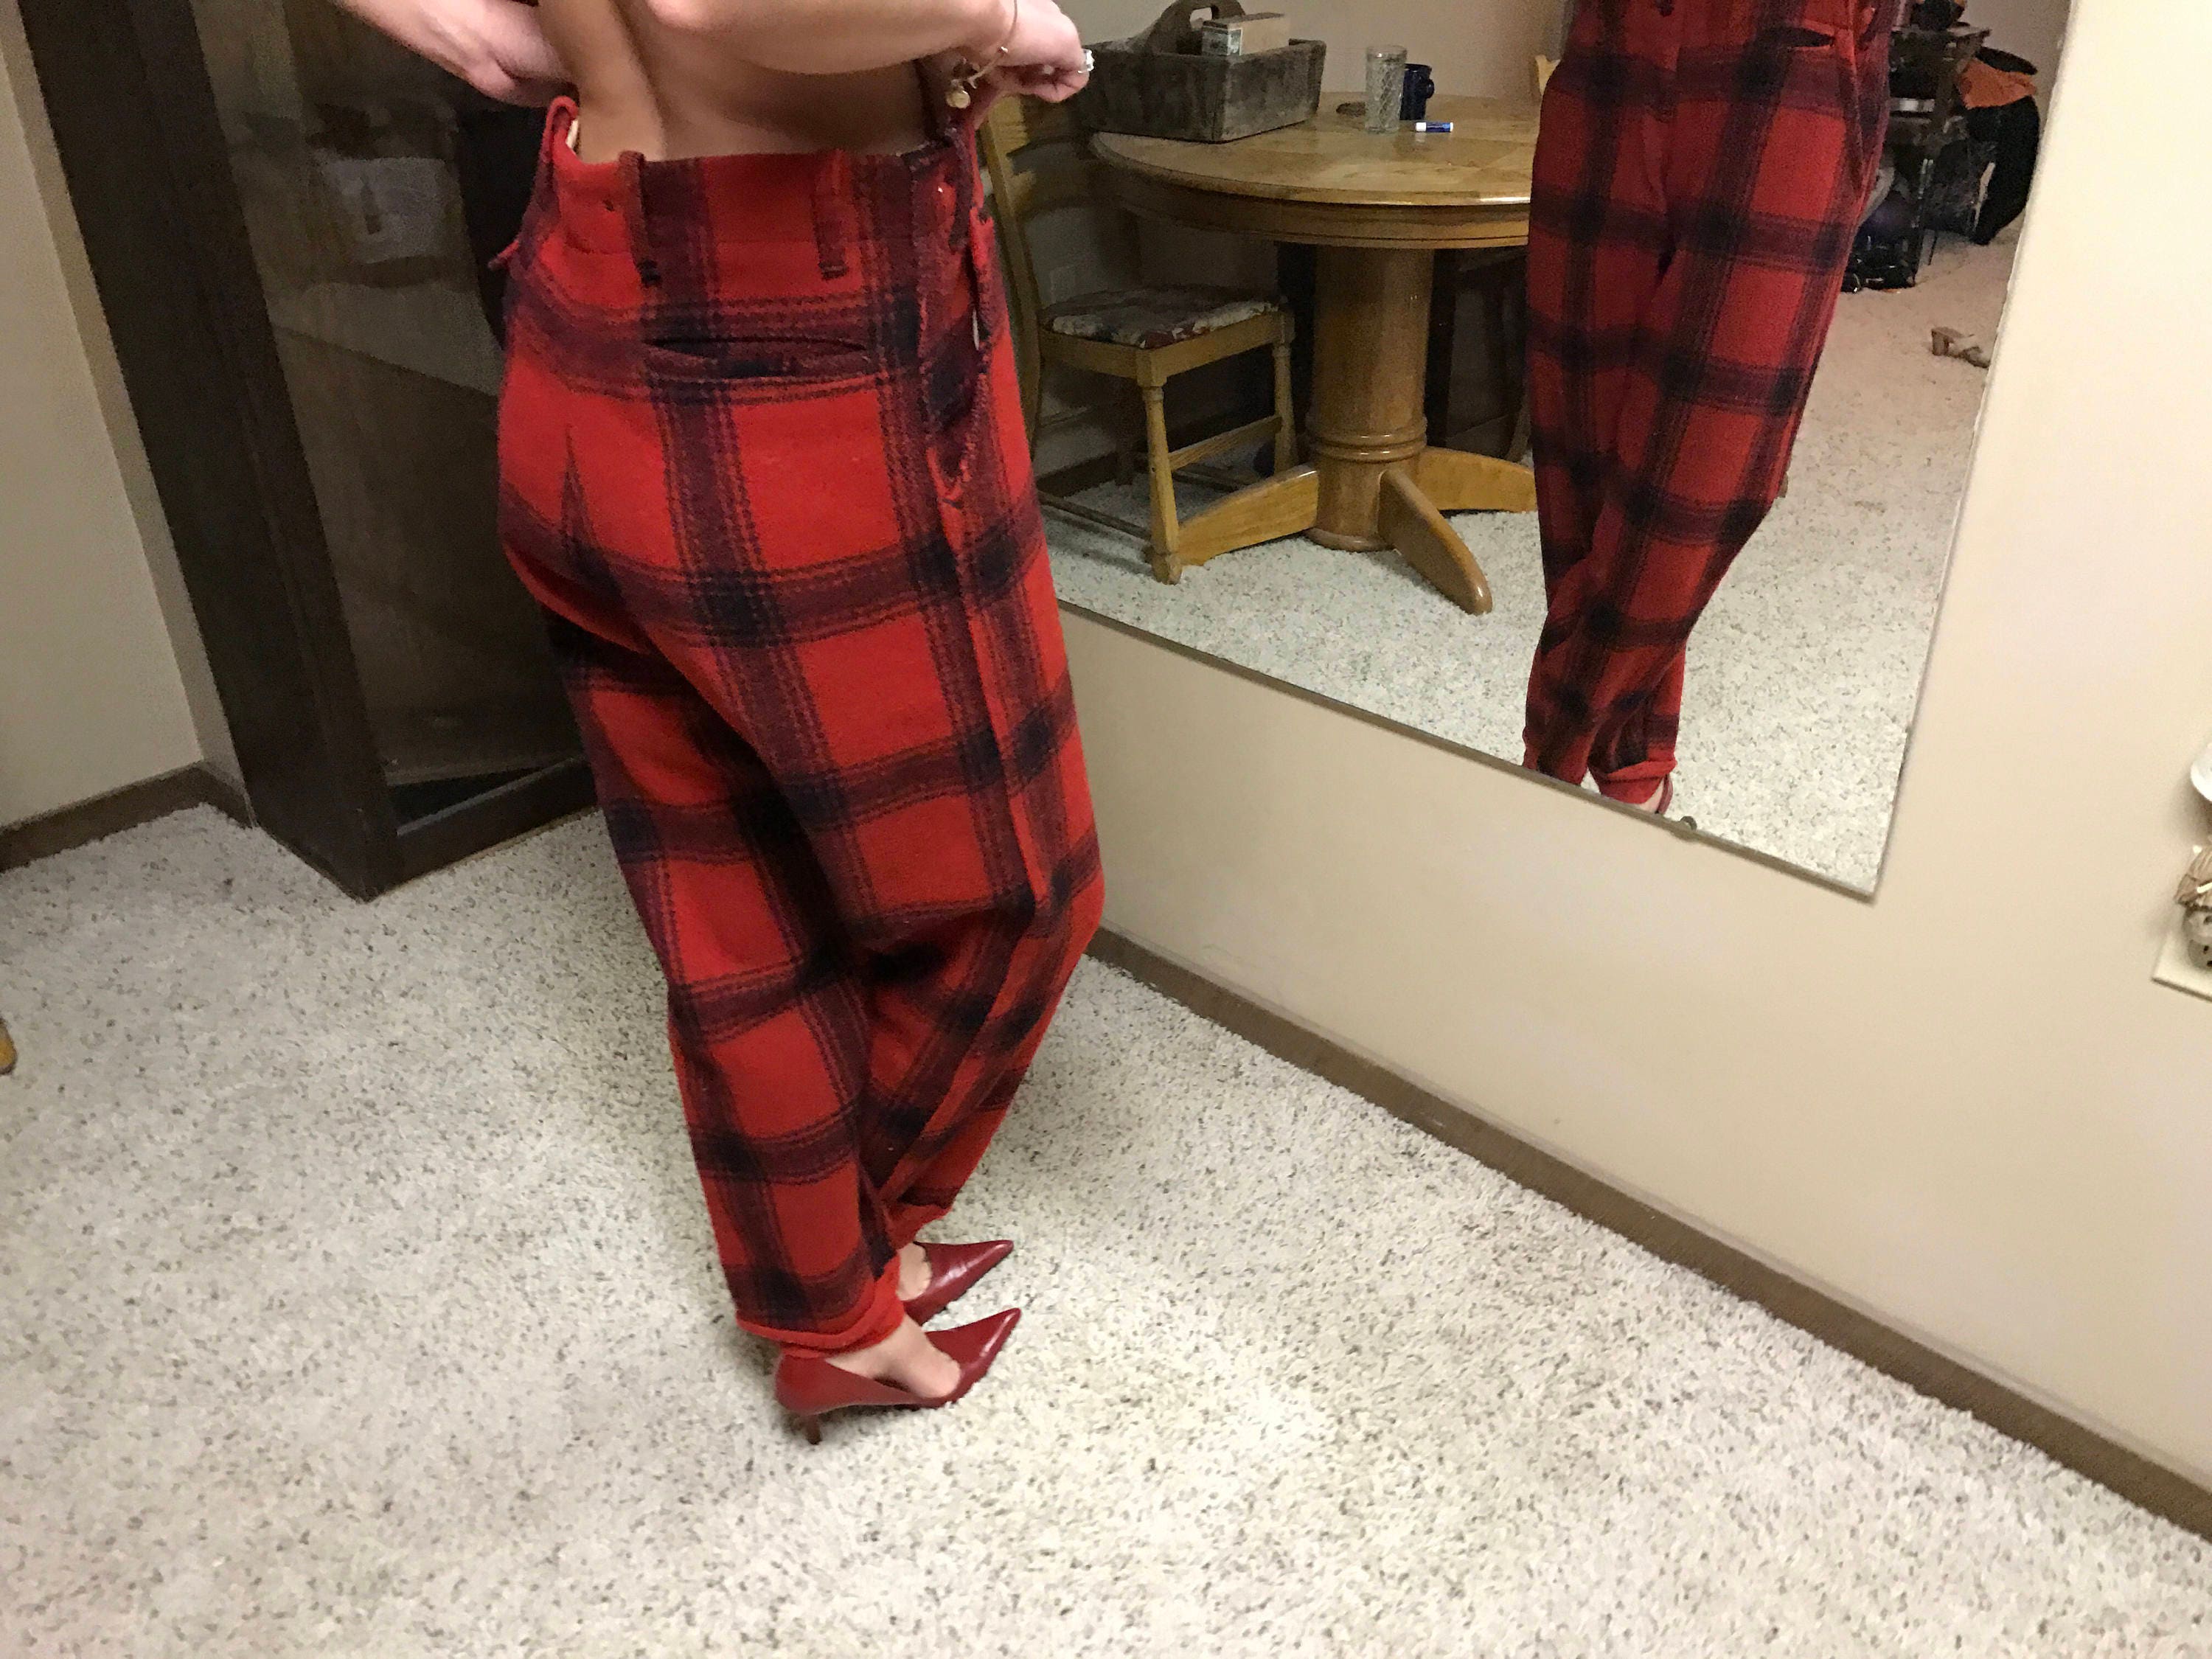 Vintage Red & Black Plaid Pajama Pants M Retro Camping Hunting